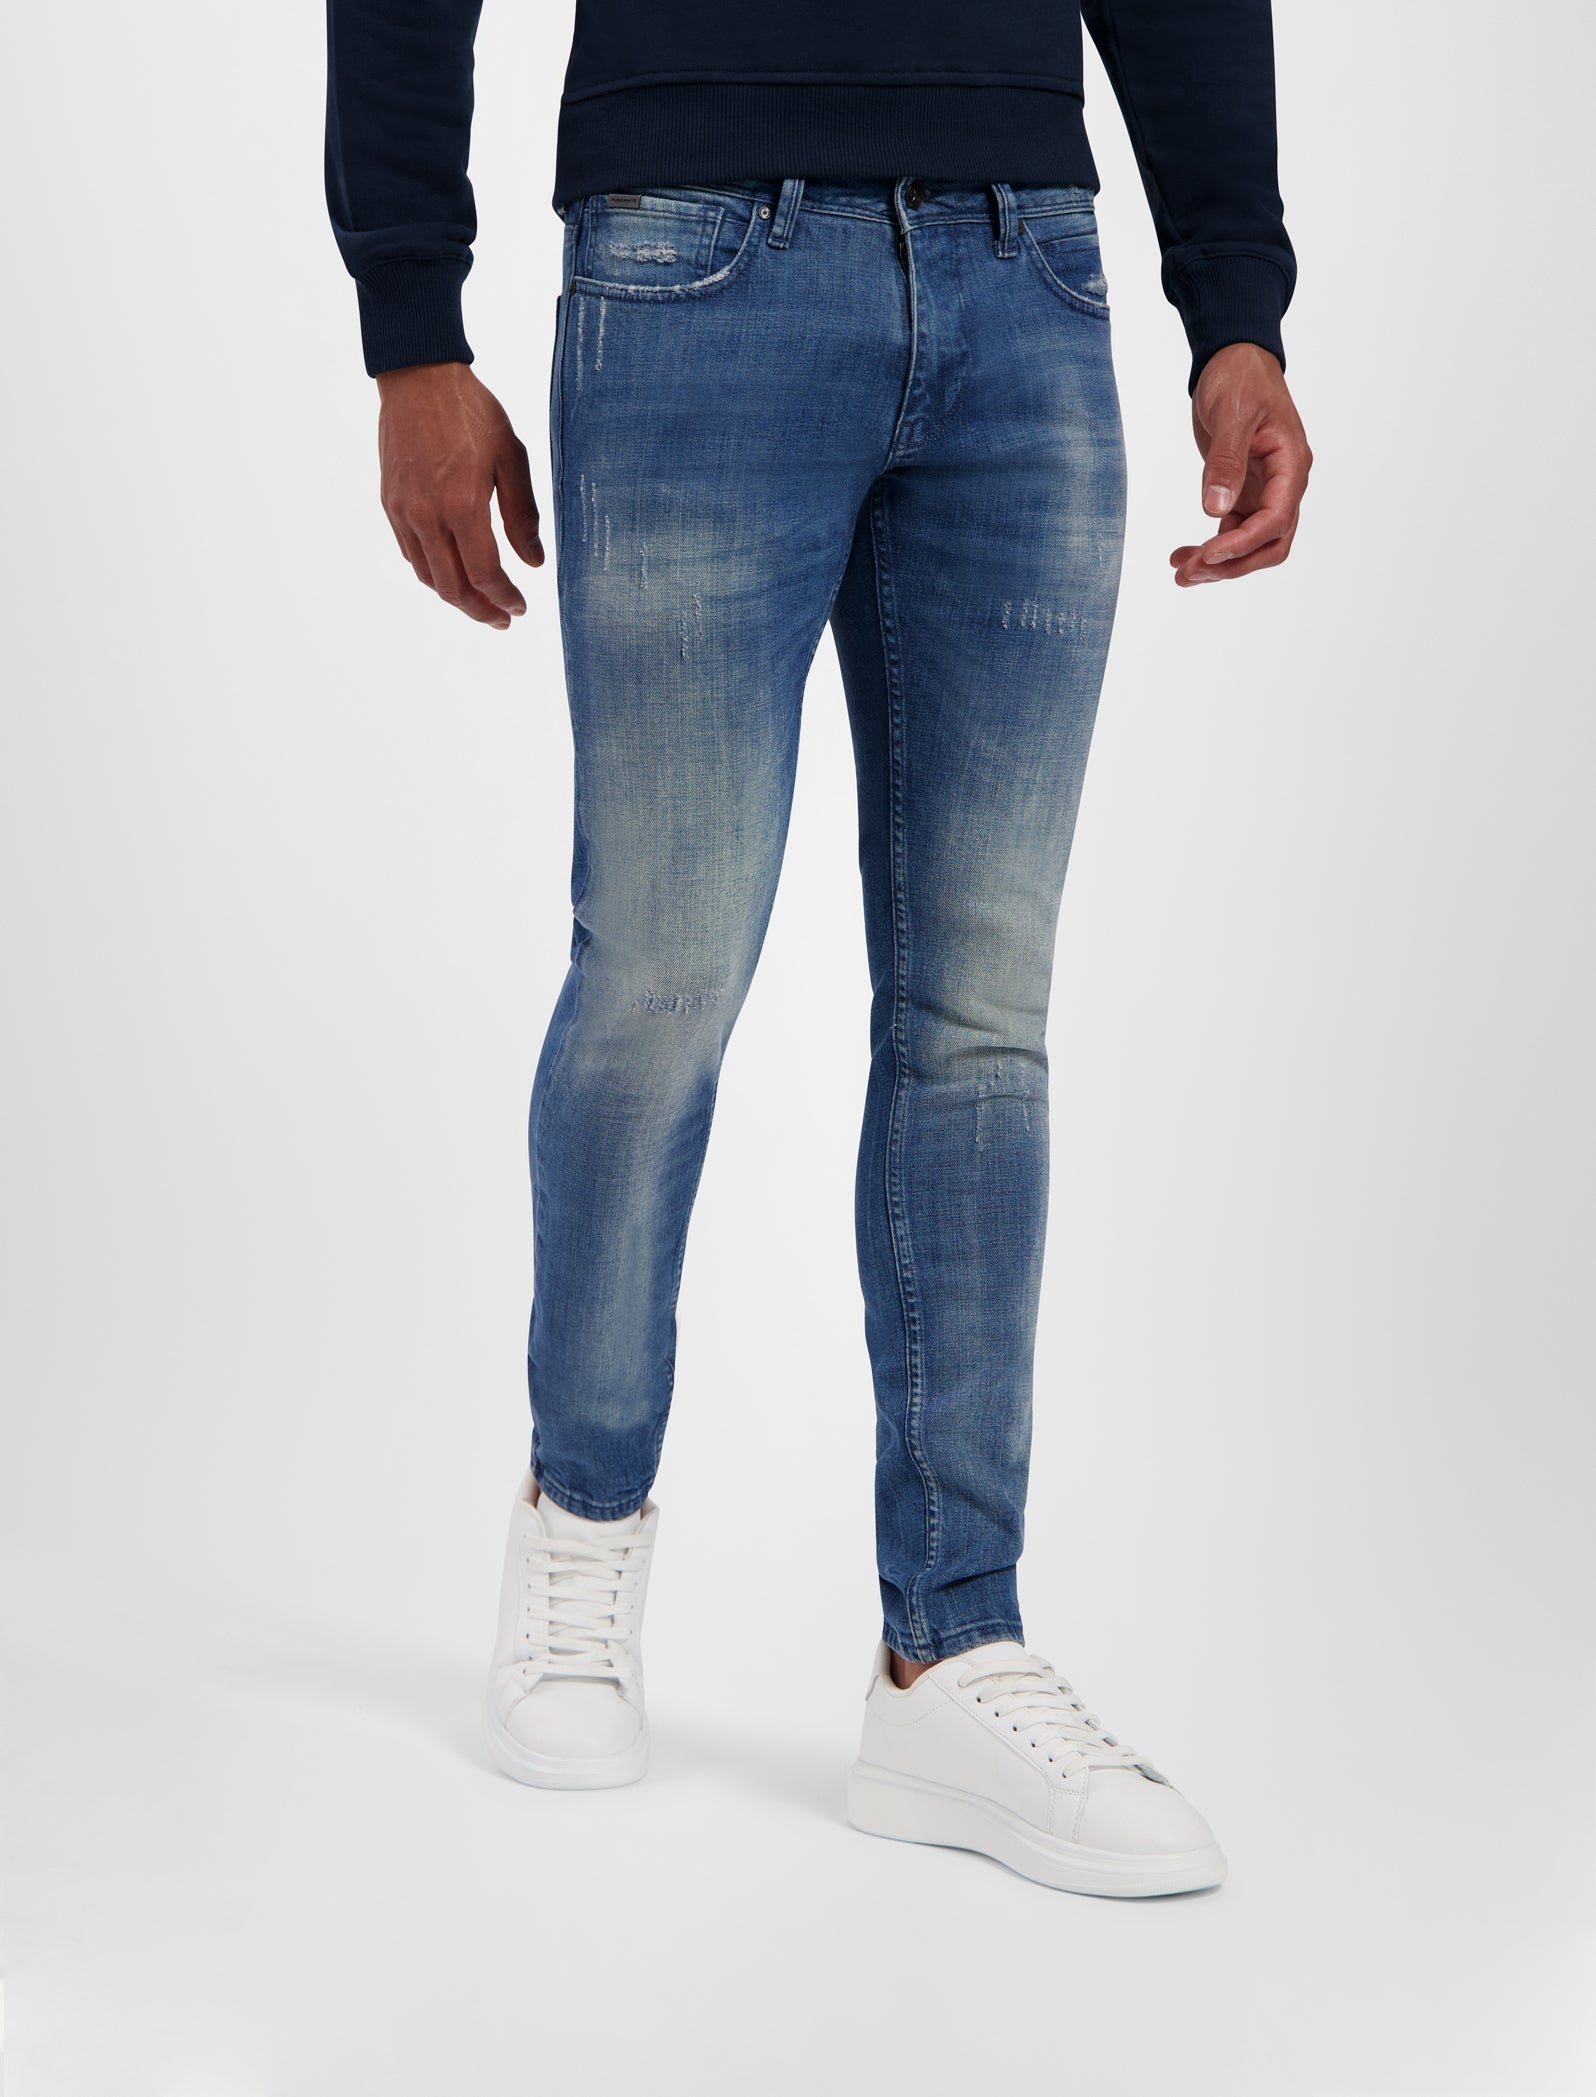 Purewhite Jeans The Jone W1103